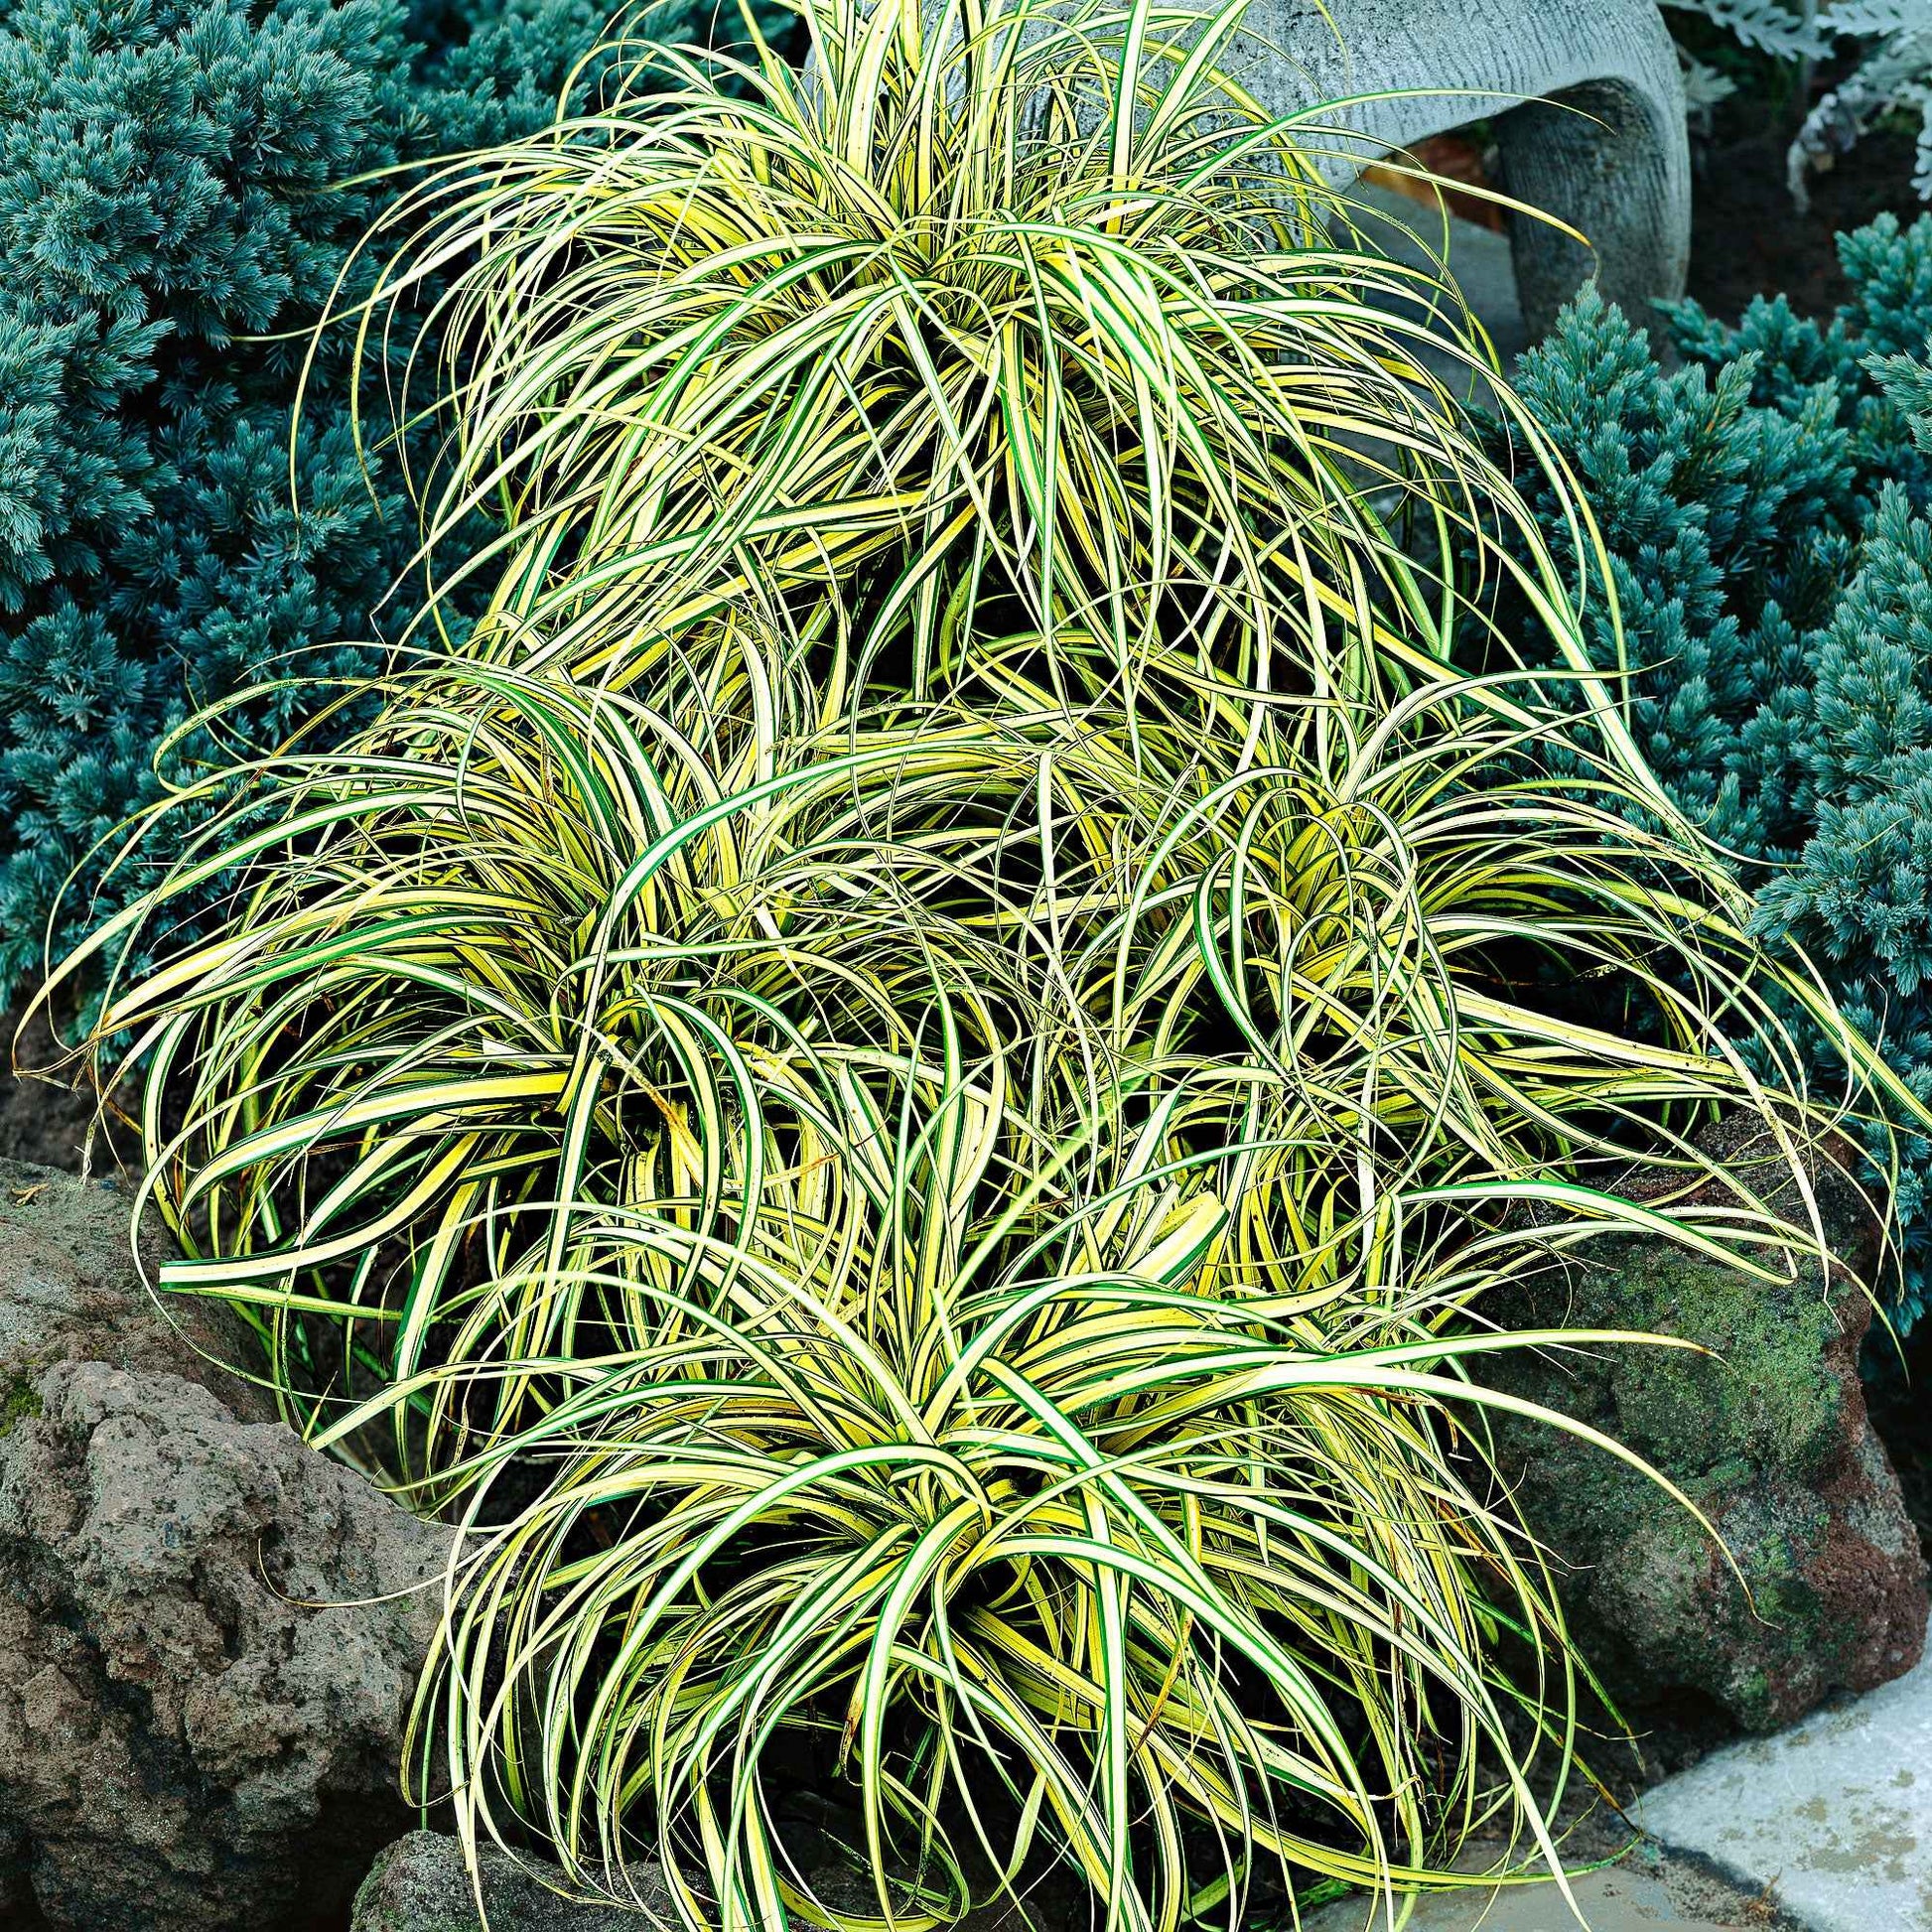 Segge 'Evergold' - Carex oshimensis evergold - Gartenpflanzen